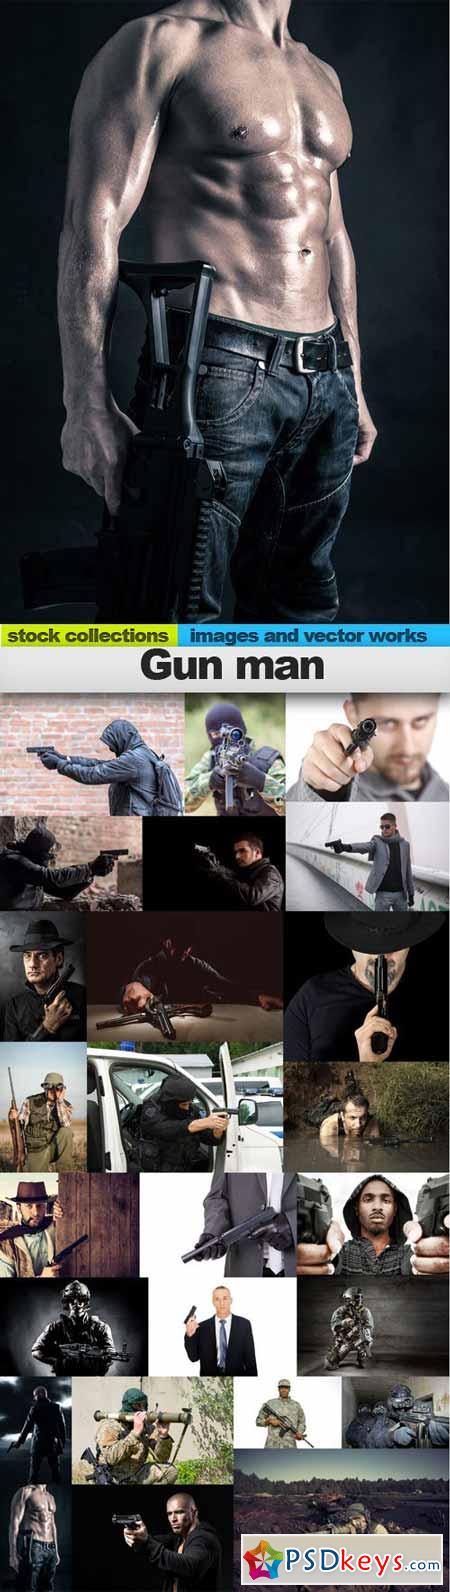 Gun man,25 x UHQ JPEG